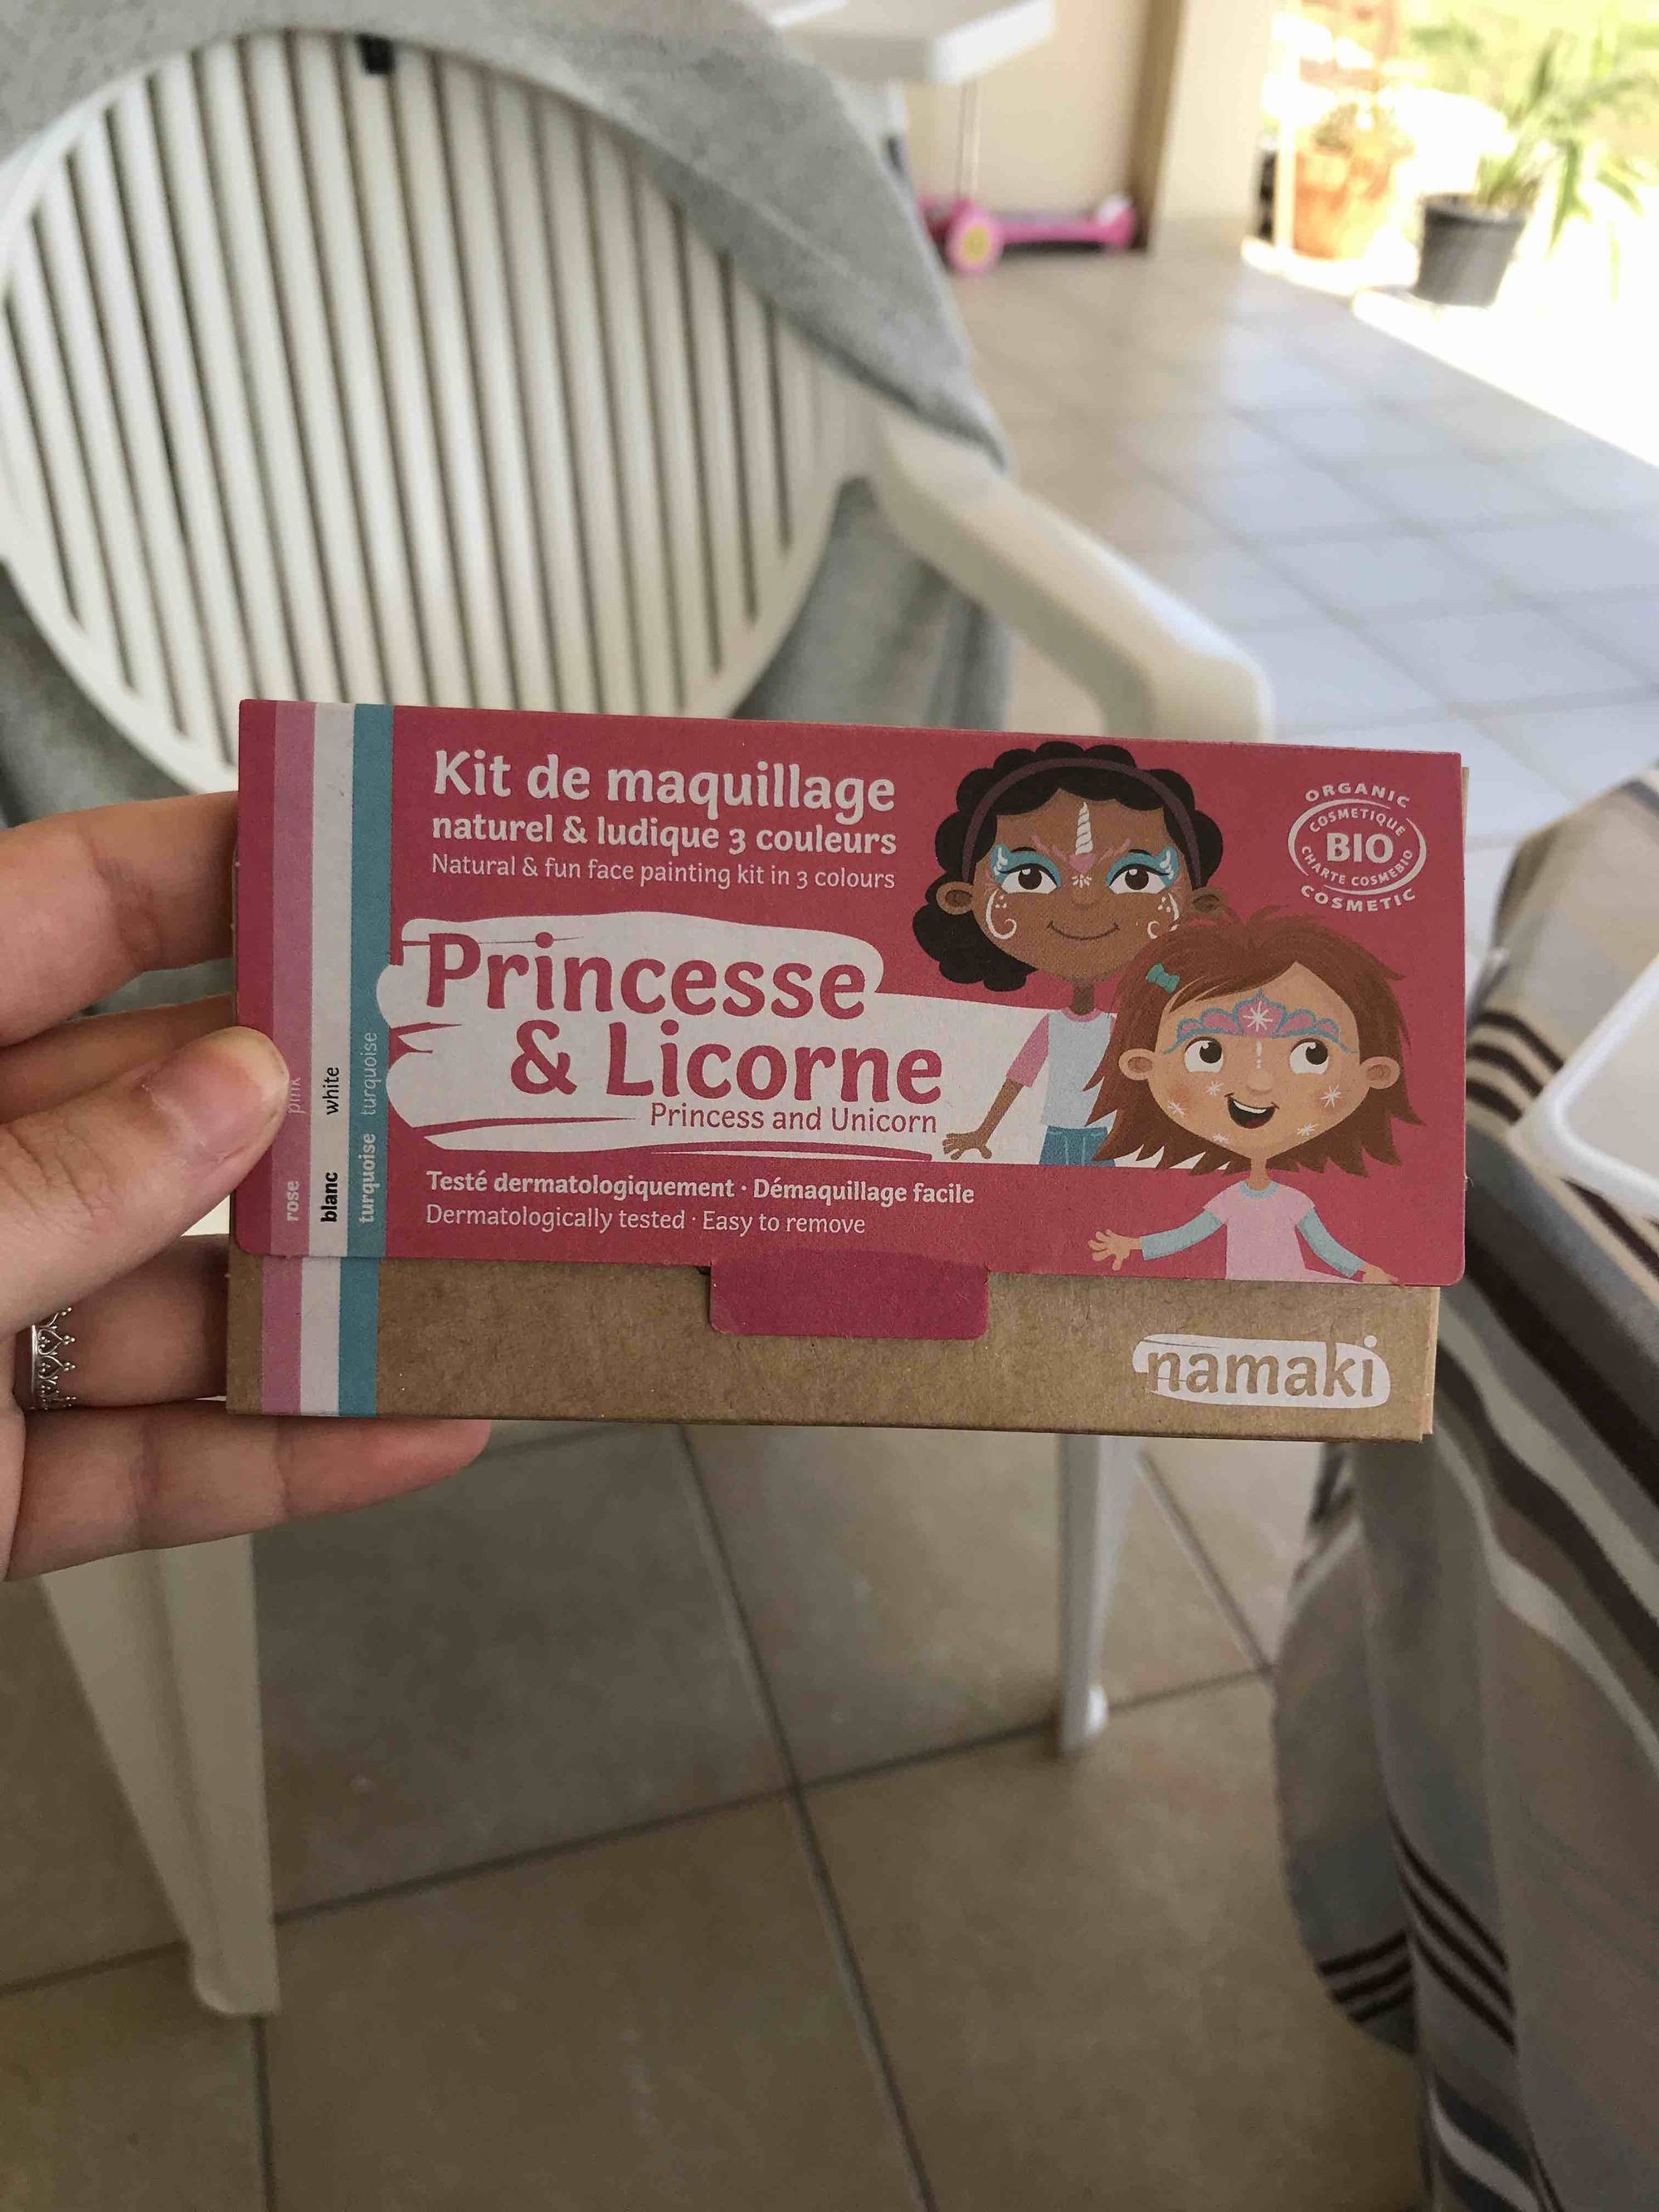 NAMAKI - Princesse & licorne - Kit de maquillage bio